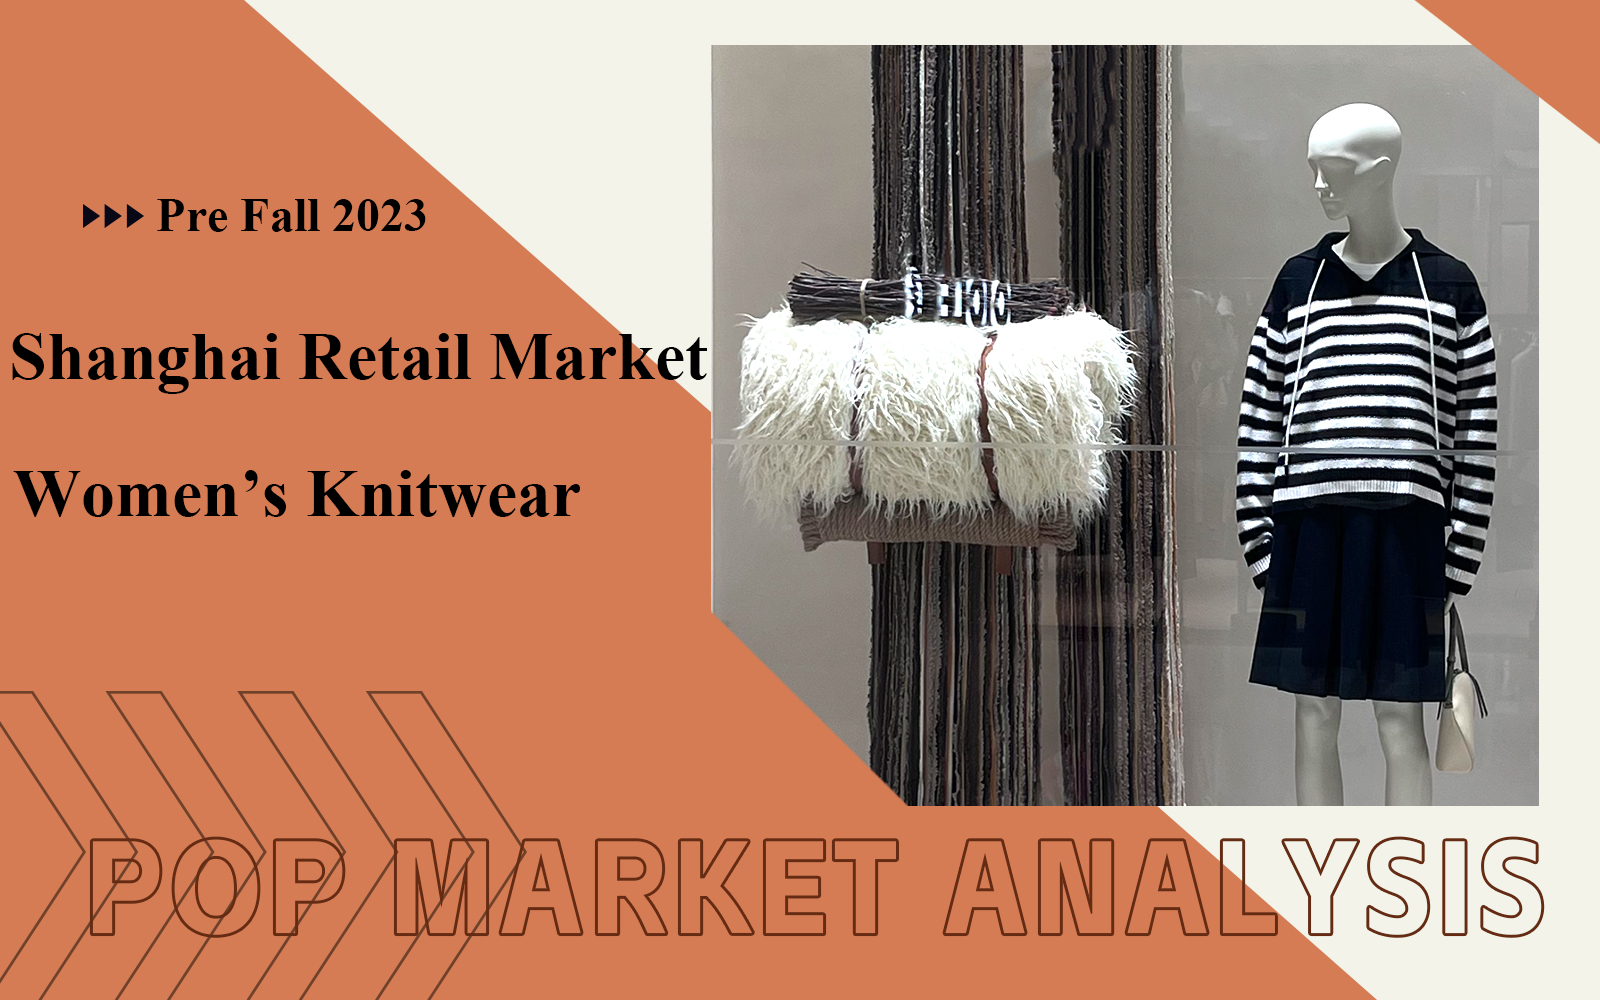 The Analysis of Shanghai Women's Knitwear Retail Market in September